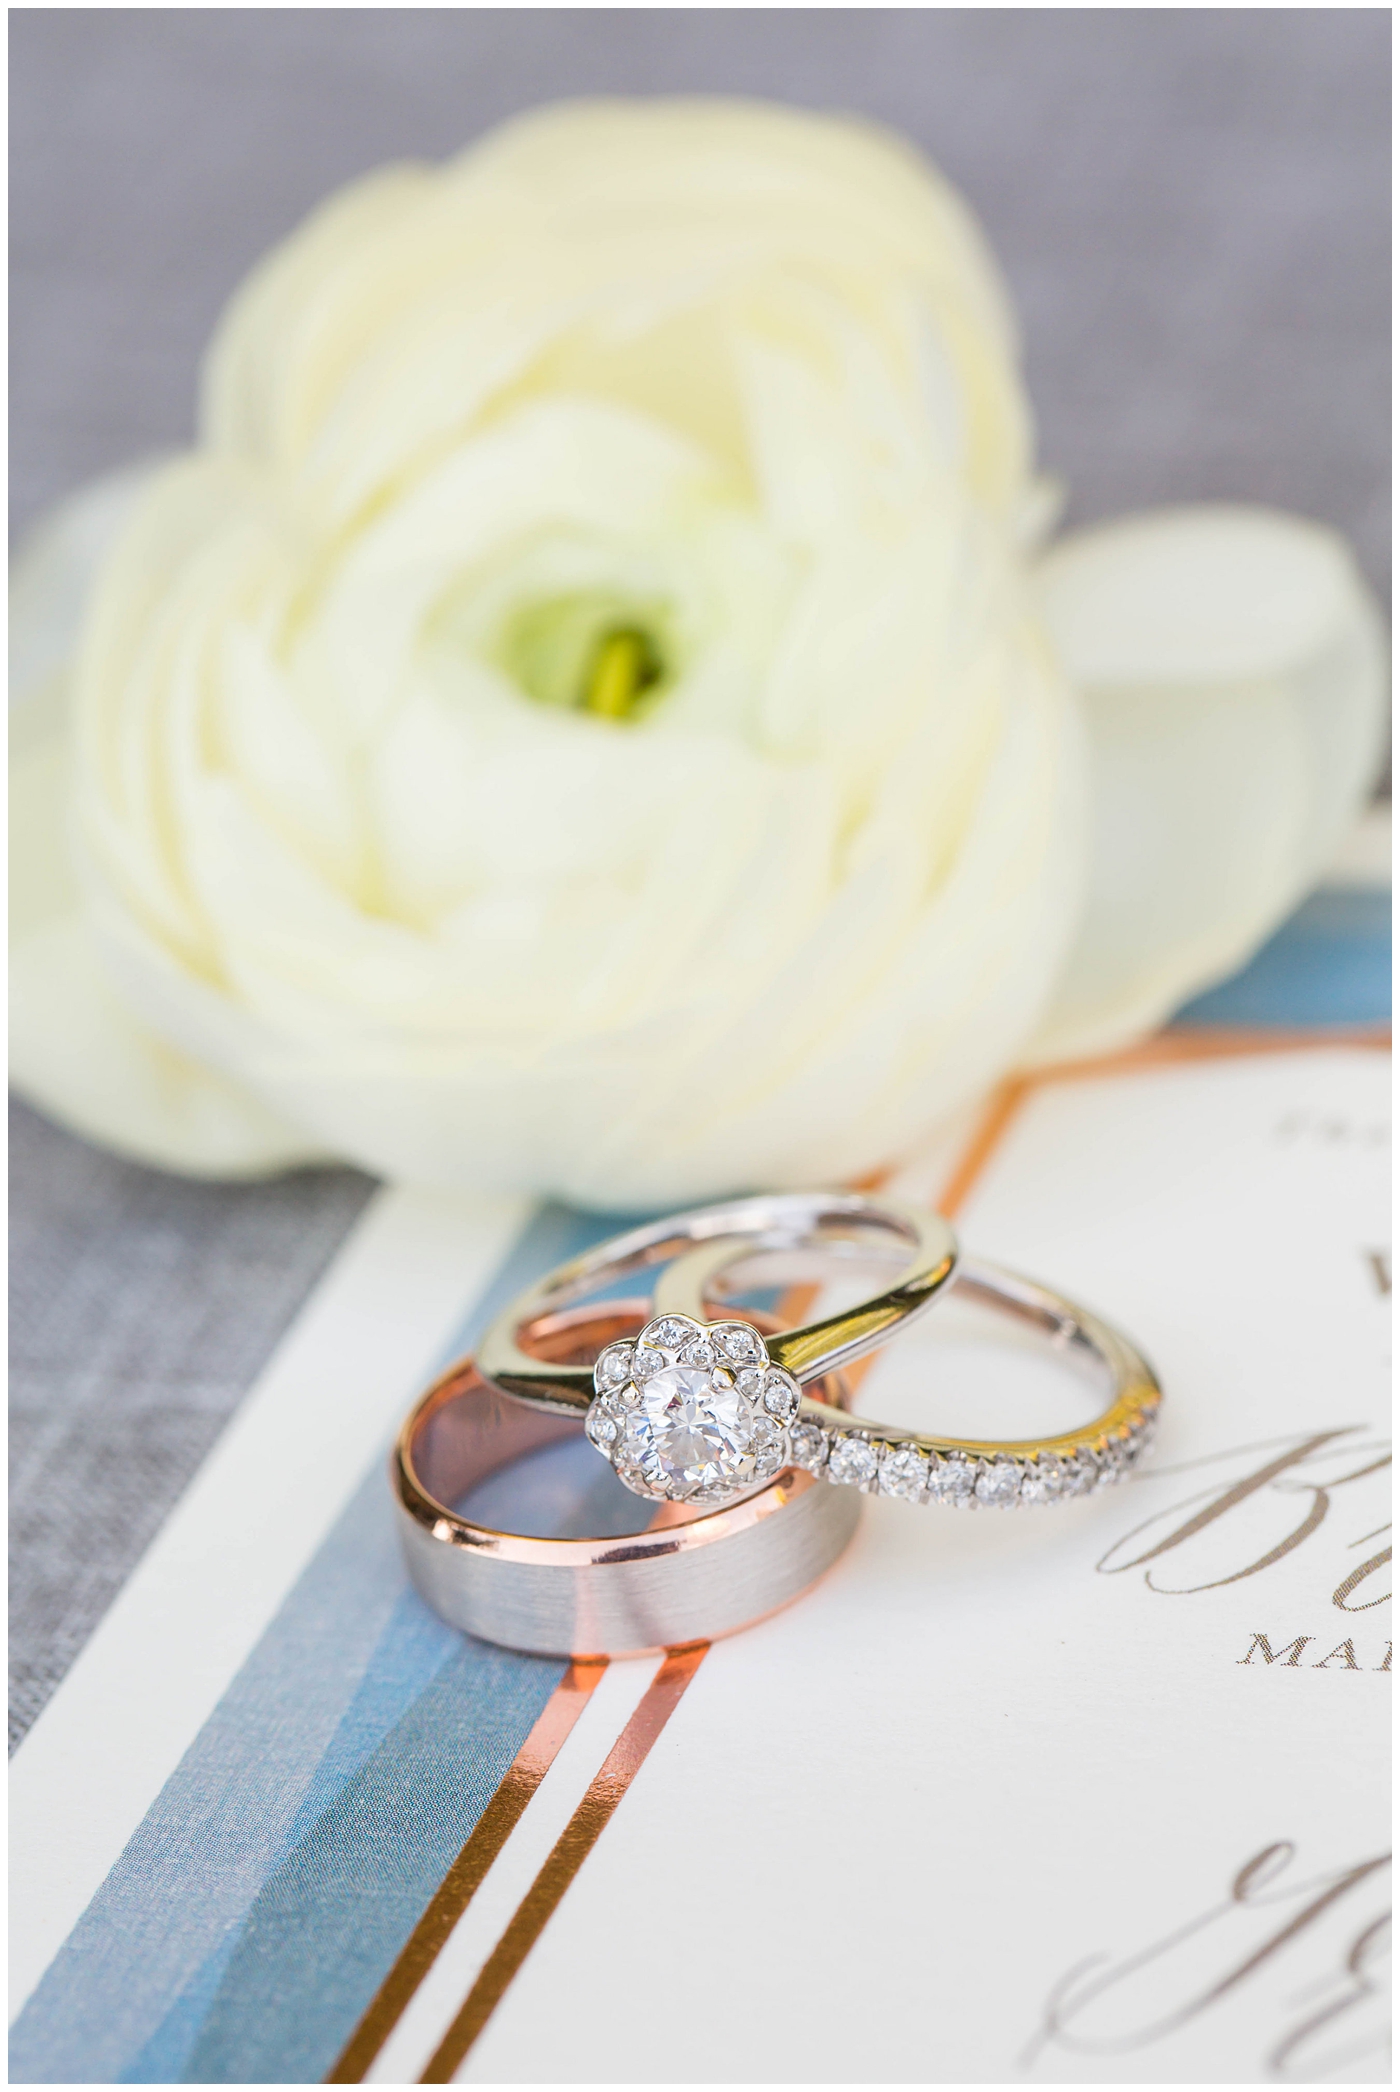 Beautiful wedding ring close up shot